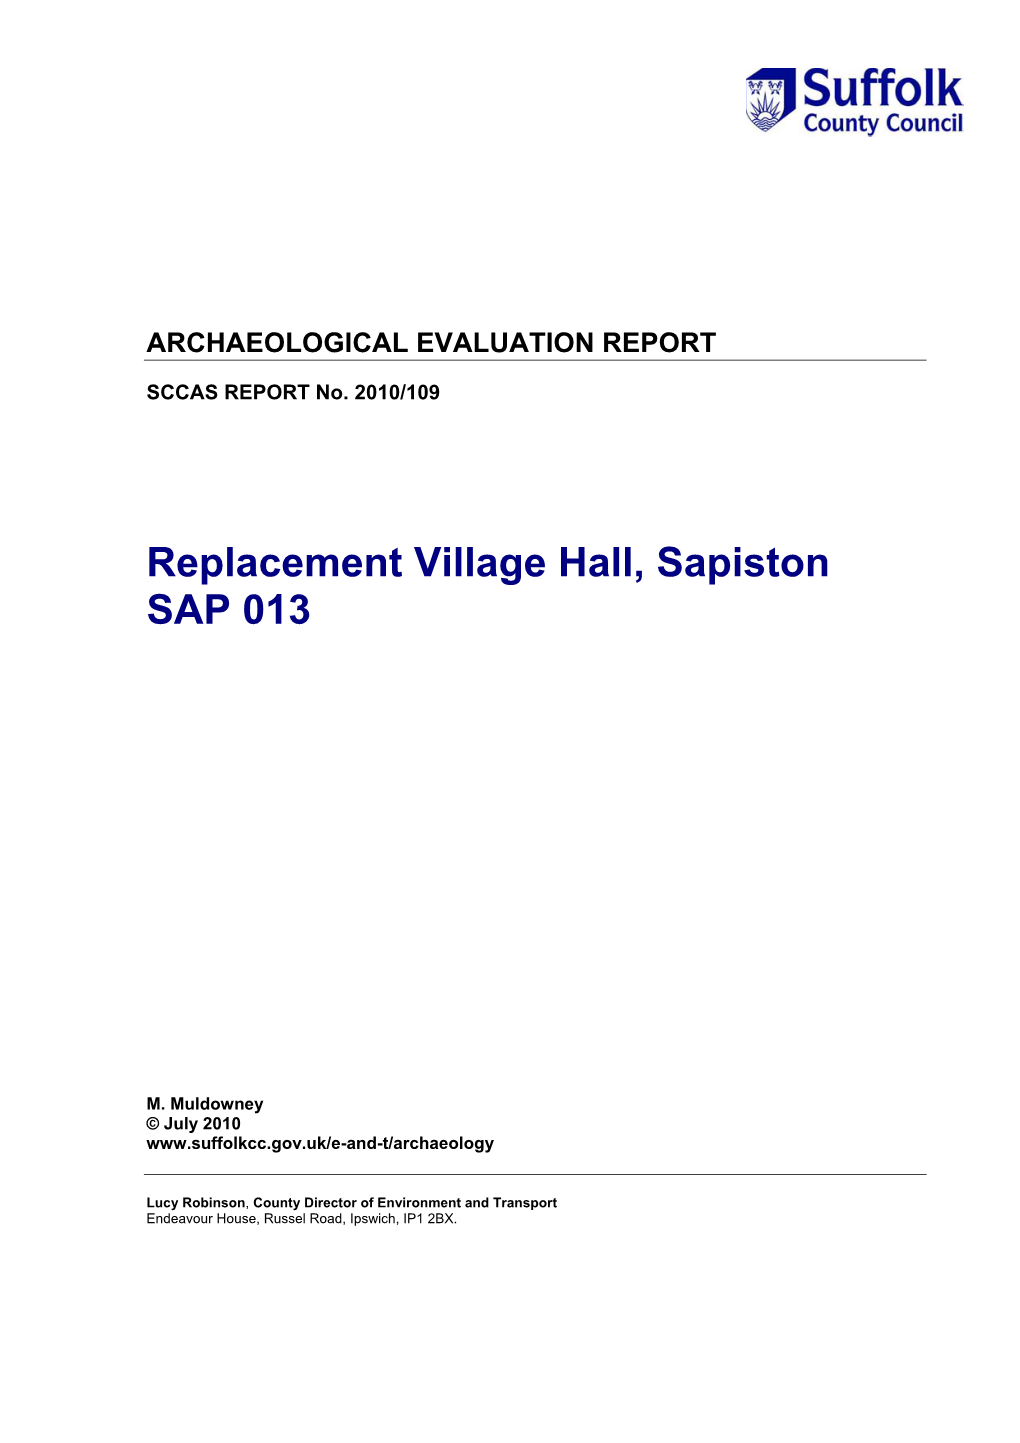 Replacement Village Hall, Sapiston SAP 013